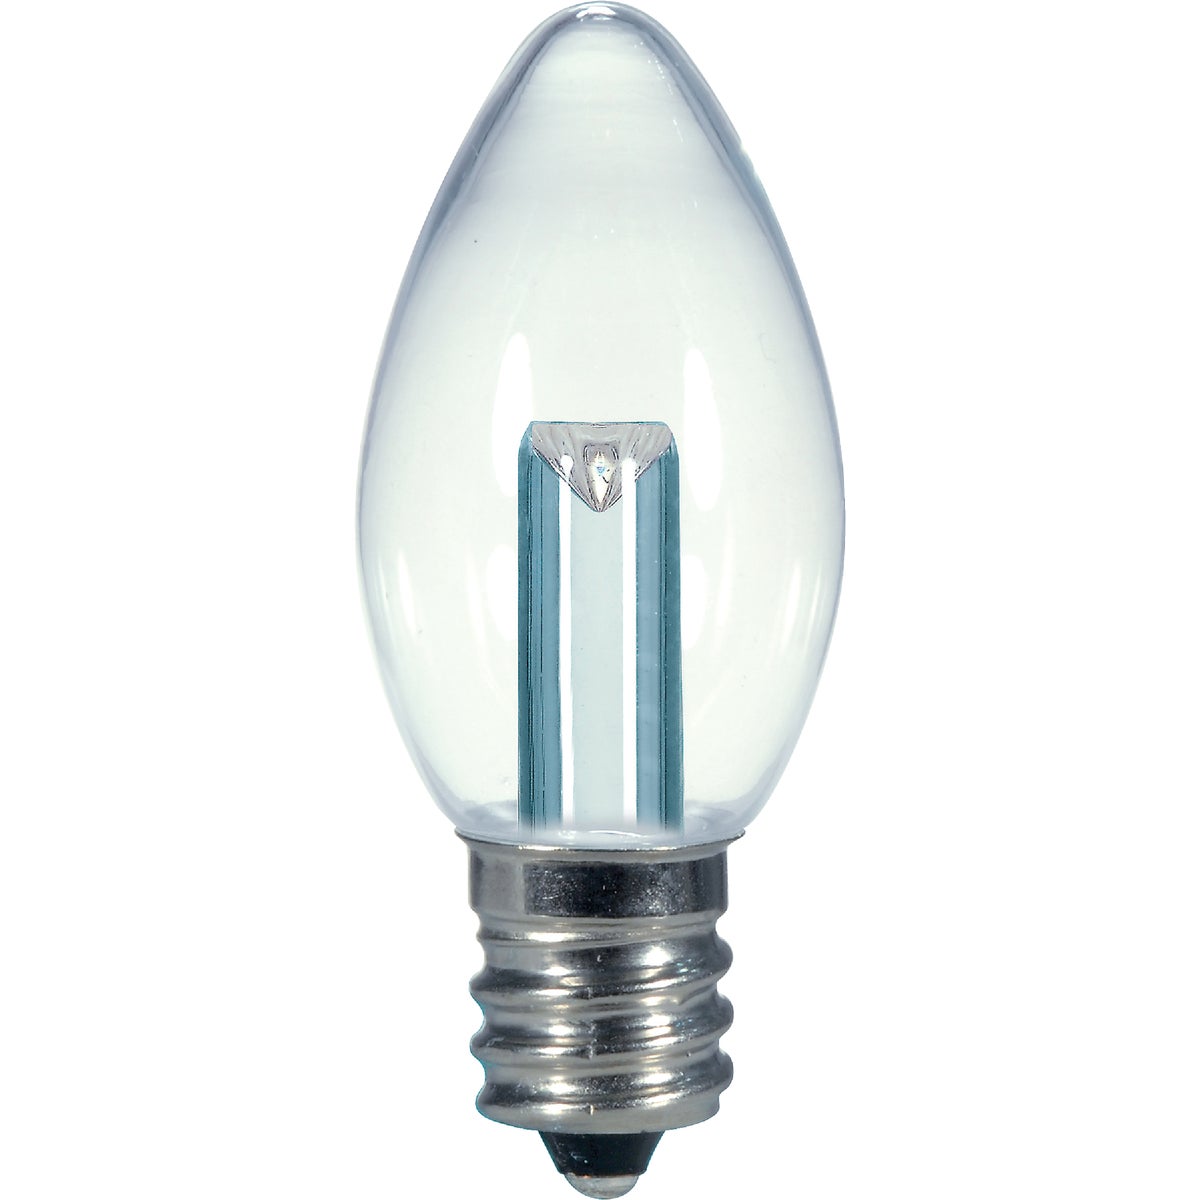 Item 501909, C7 decorative LED (light emitting diode) night-light bulb with candelabra 